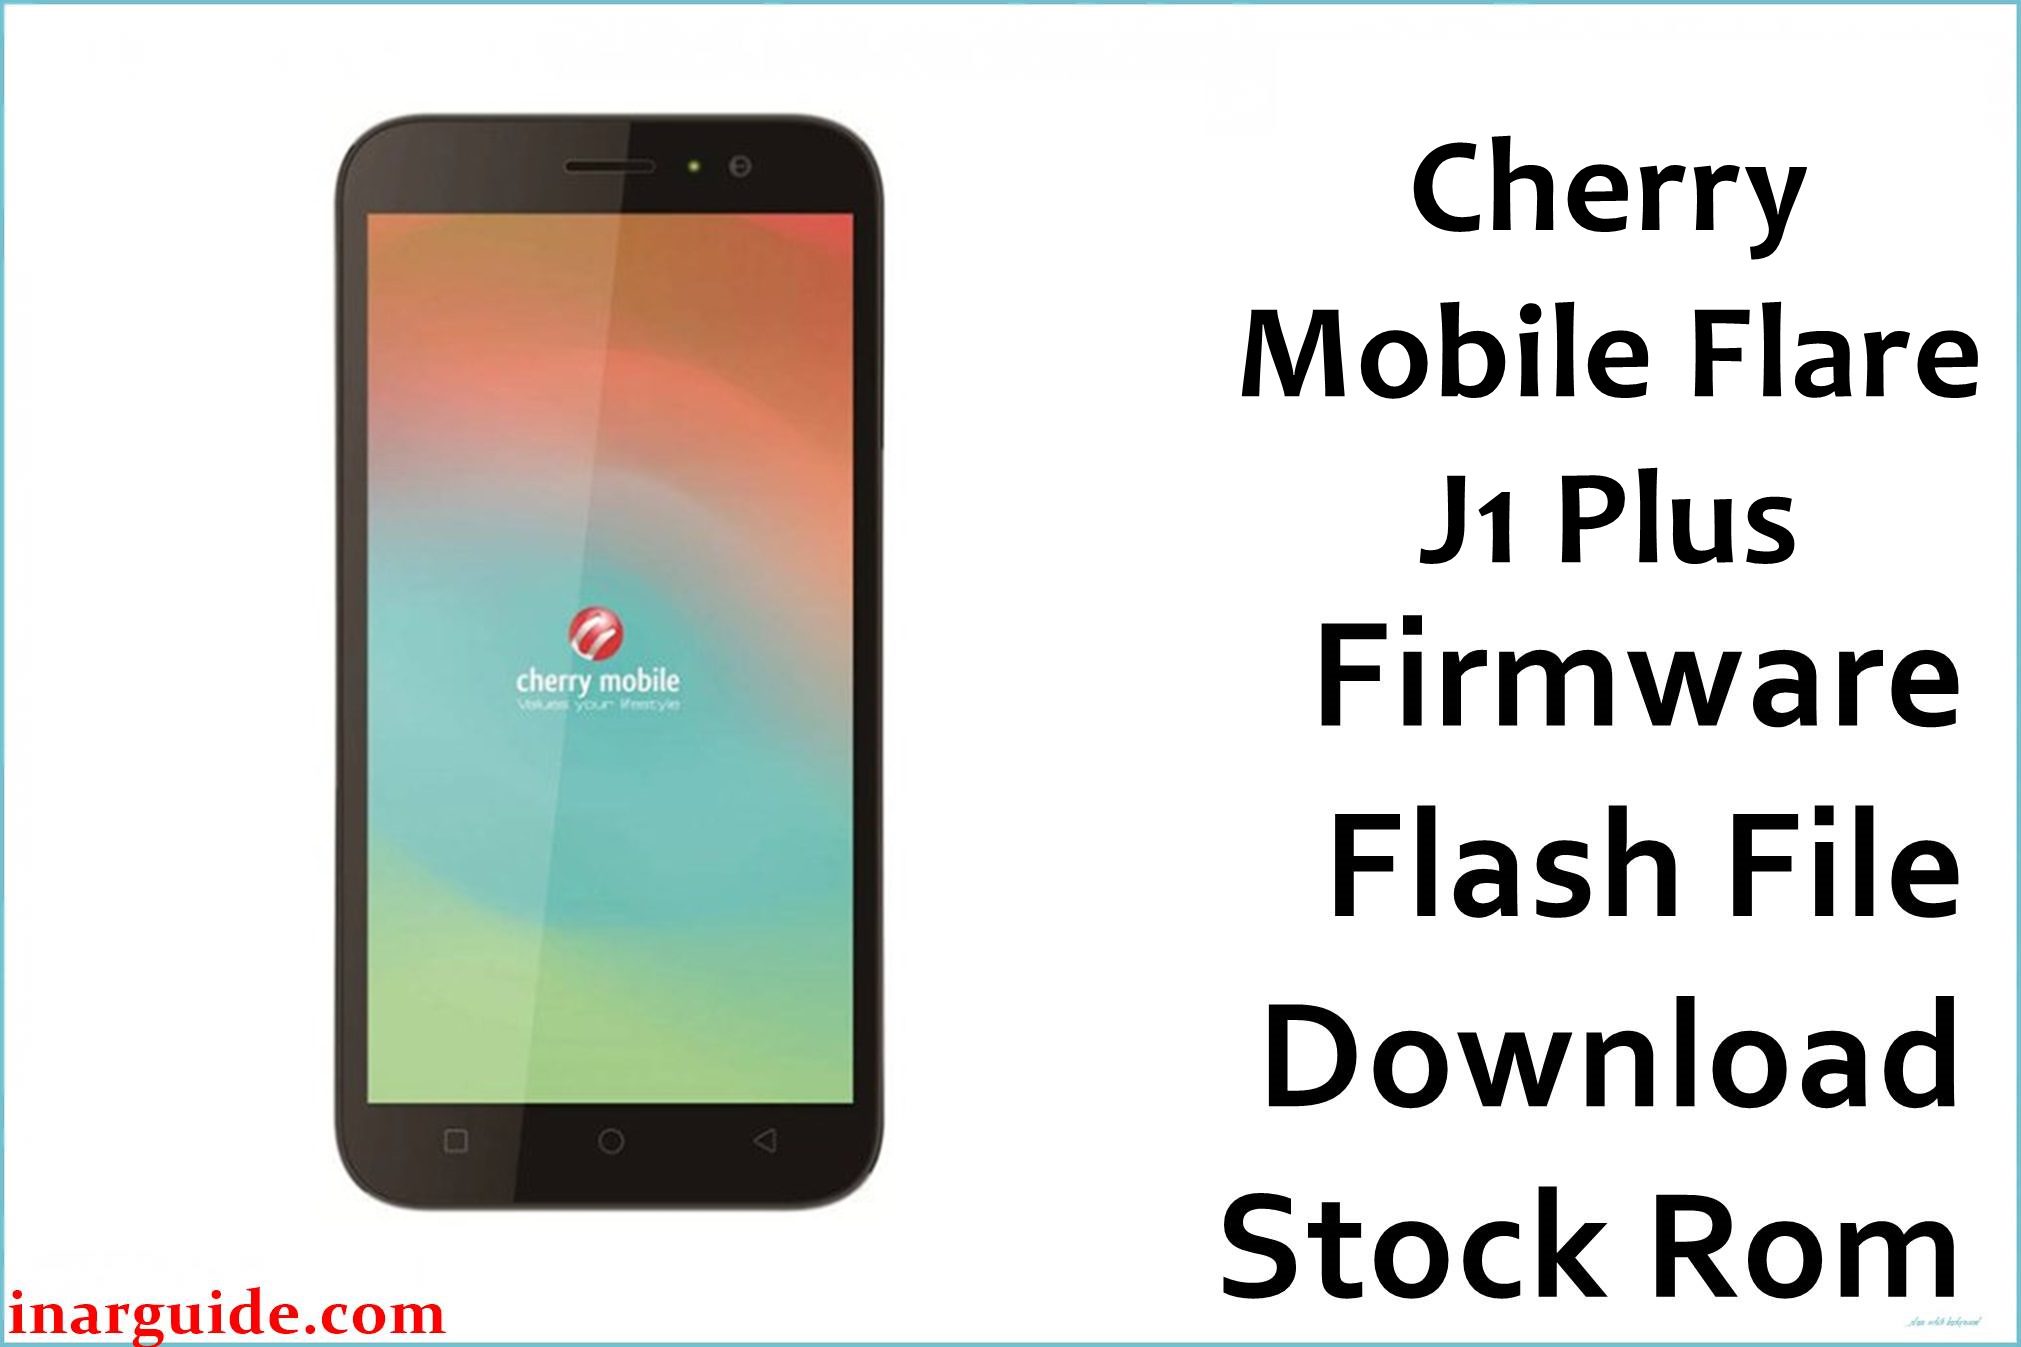 Cherry Mobile Flare J1 Plus